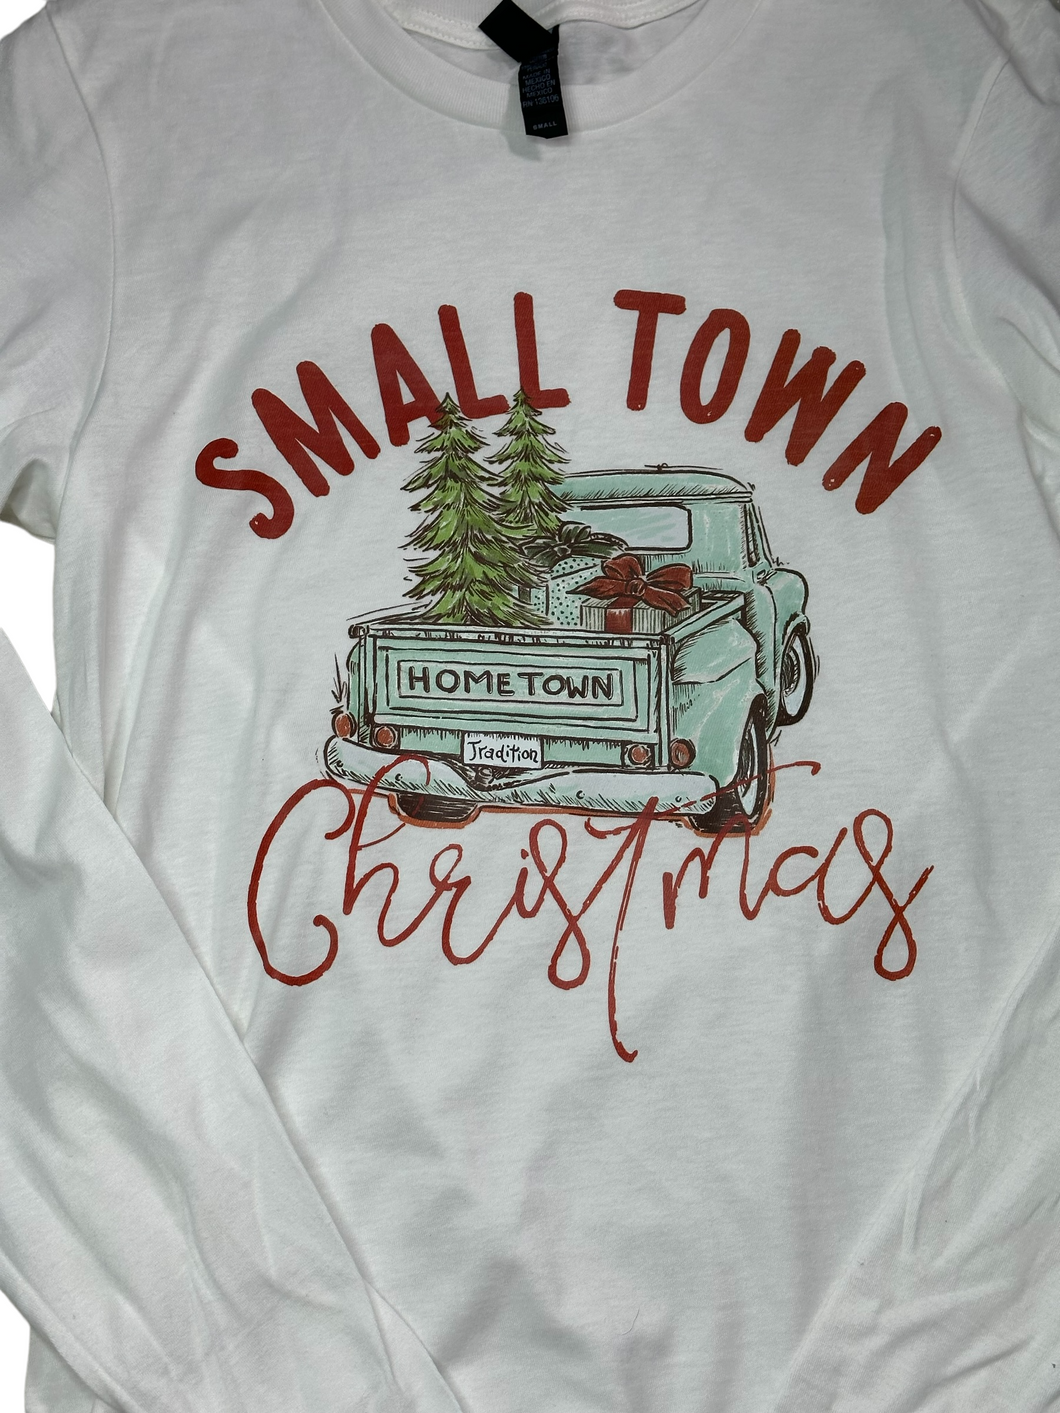 Long Sleeve Small Town Christmas